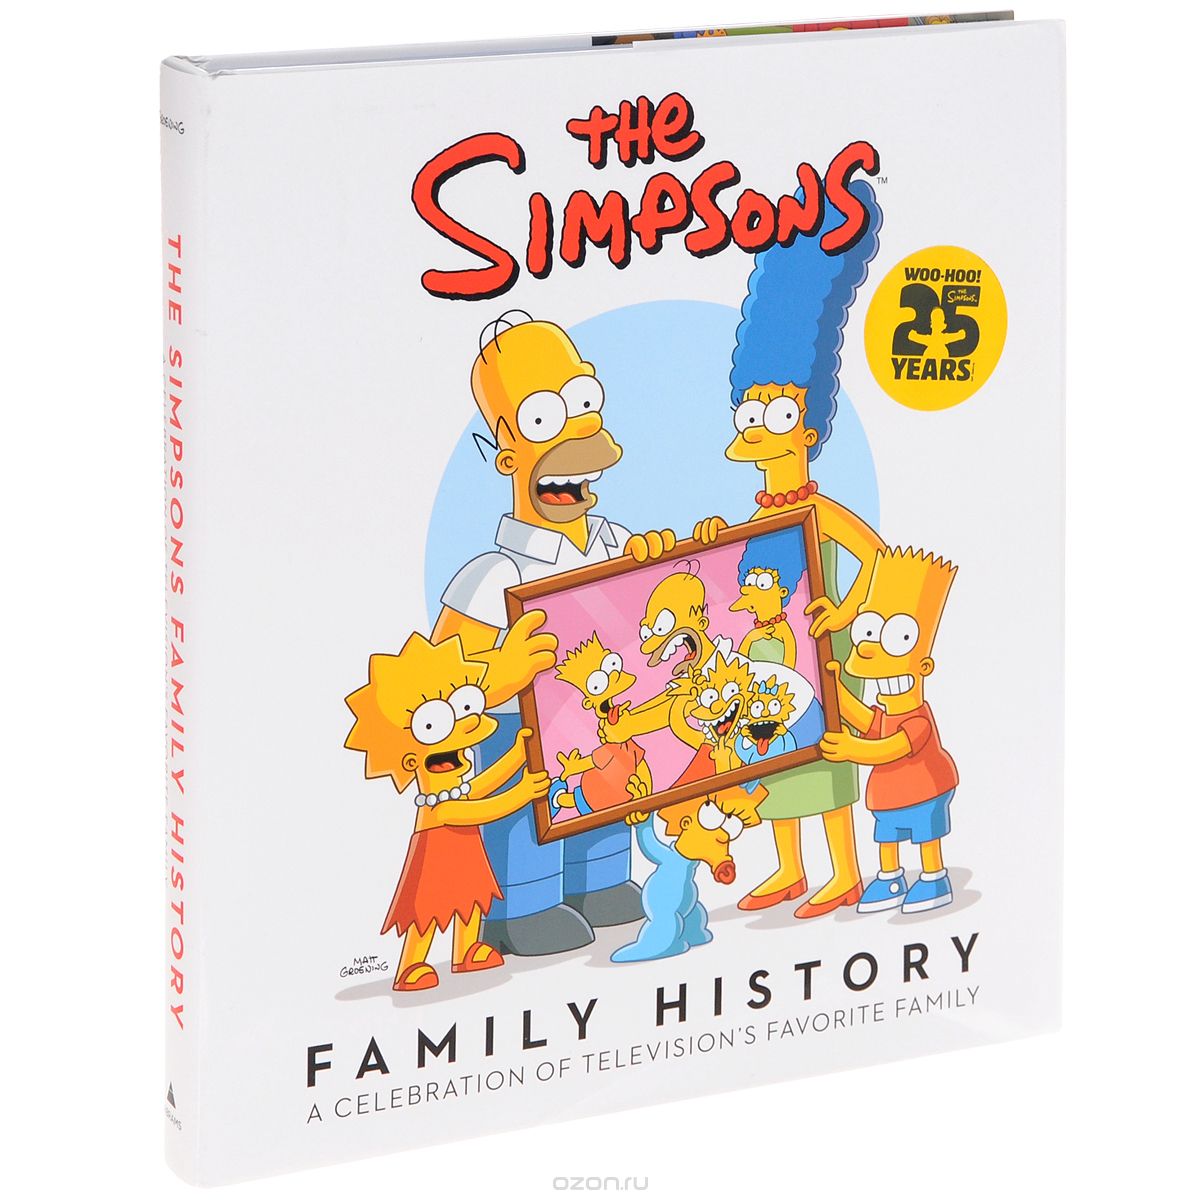 Скачать книгу "The Simpsons: Family History"